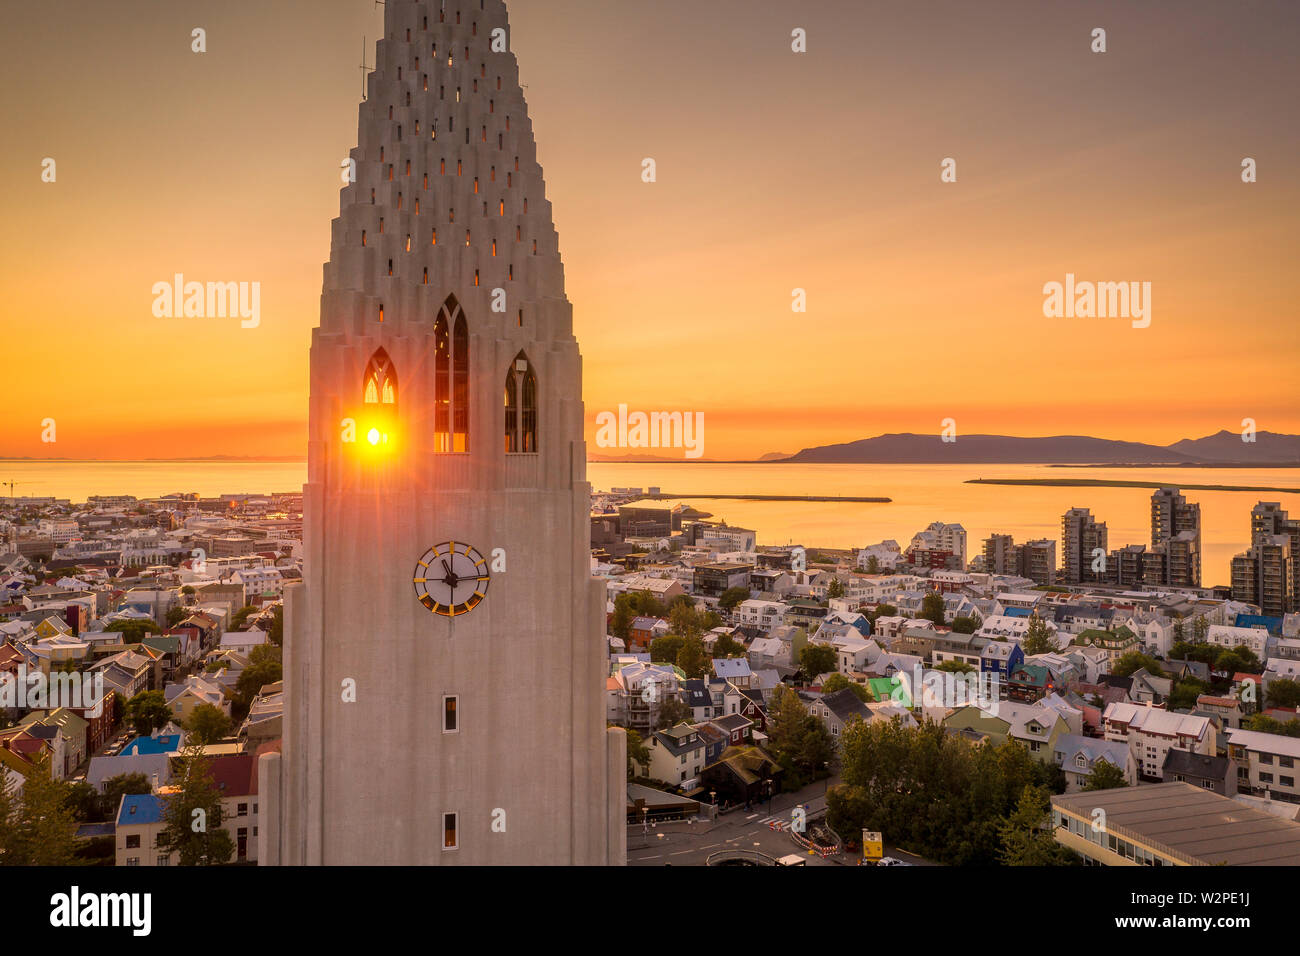 Midnight Sun, Hallgrimskirkja Church, Reykjavik, Iceland. This image is shot using a drone. Stock Photo